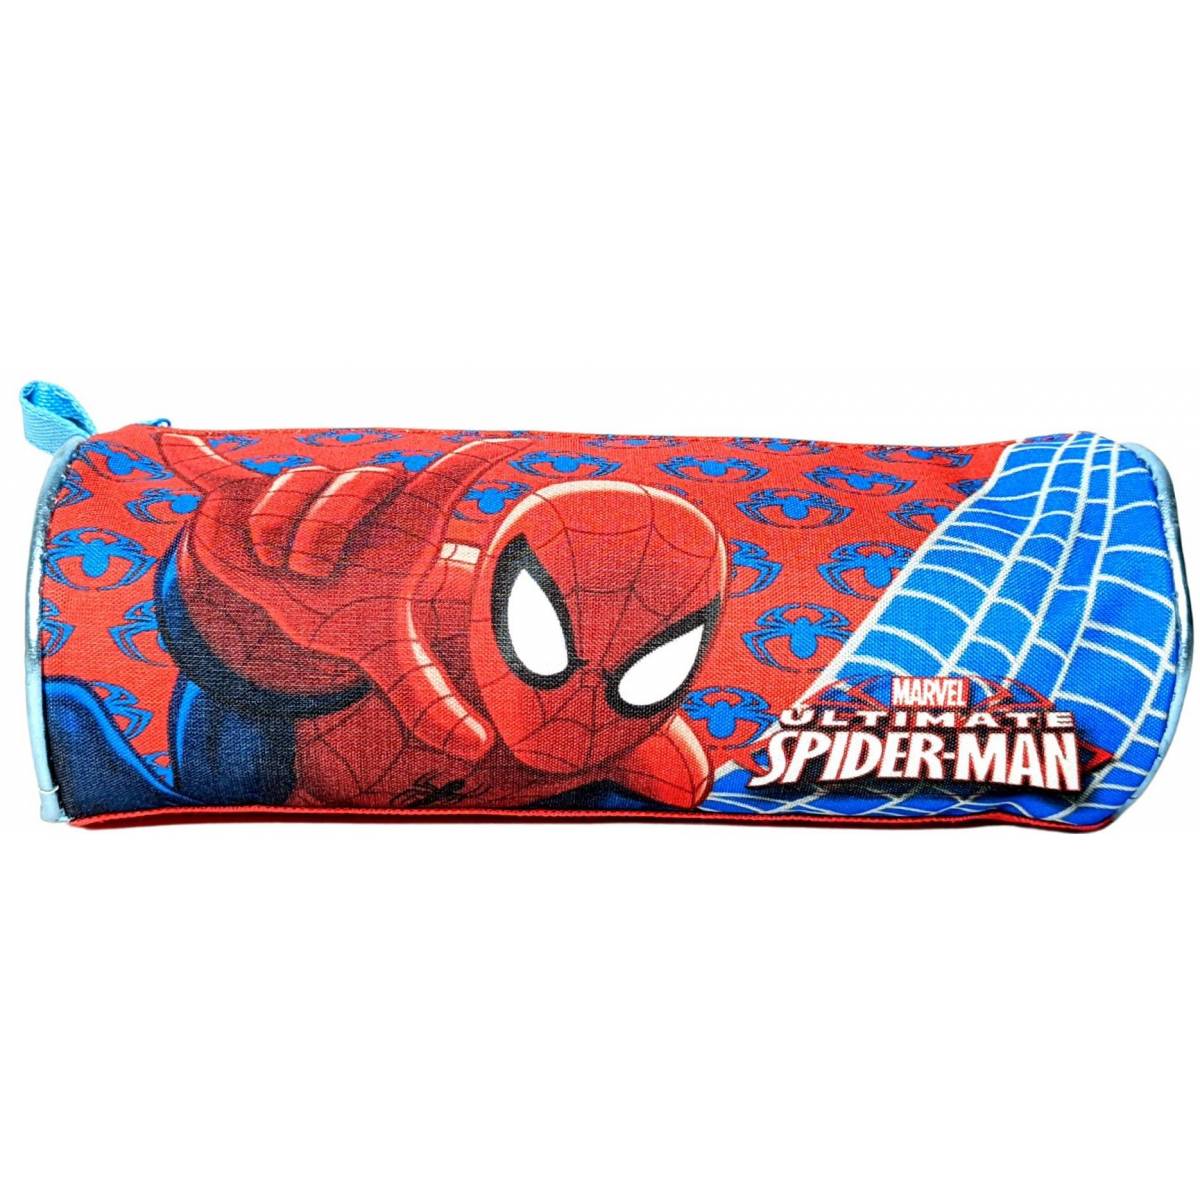 Ultimate Spider-Man - Avengers trousse scolaire 22 x 8 cm